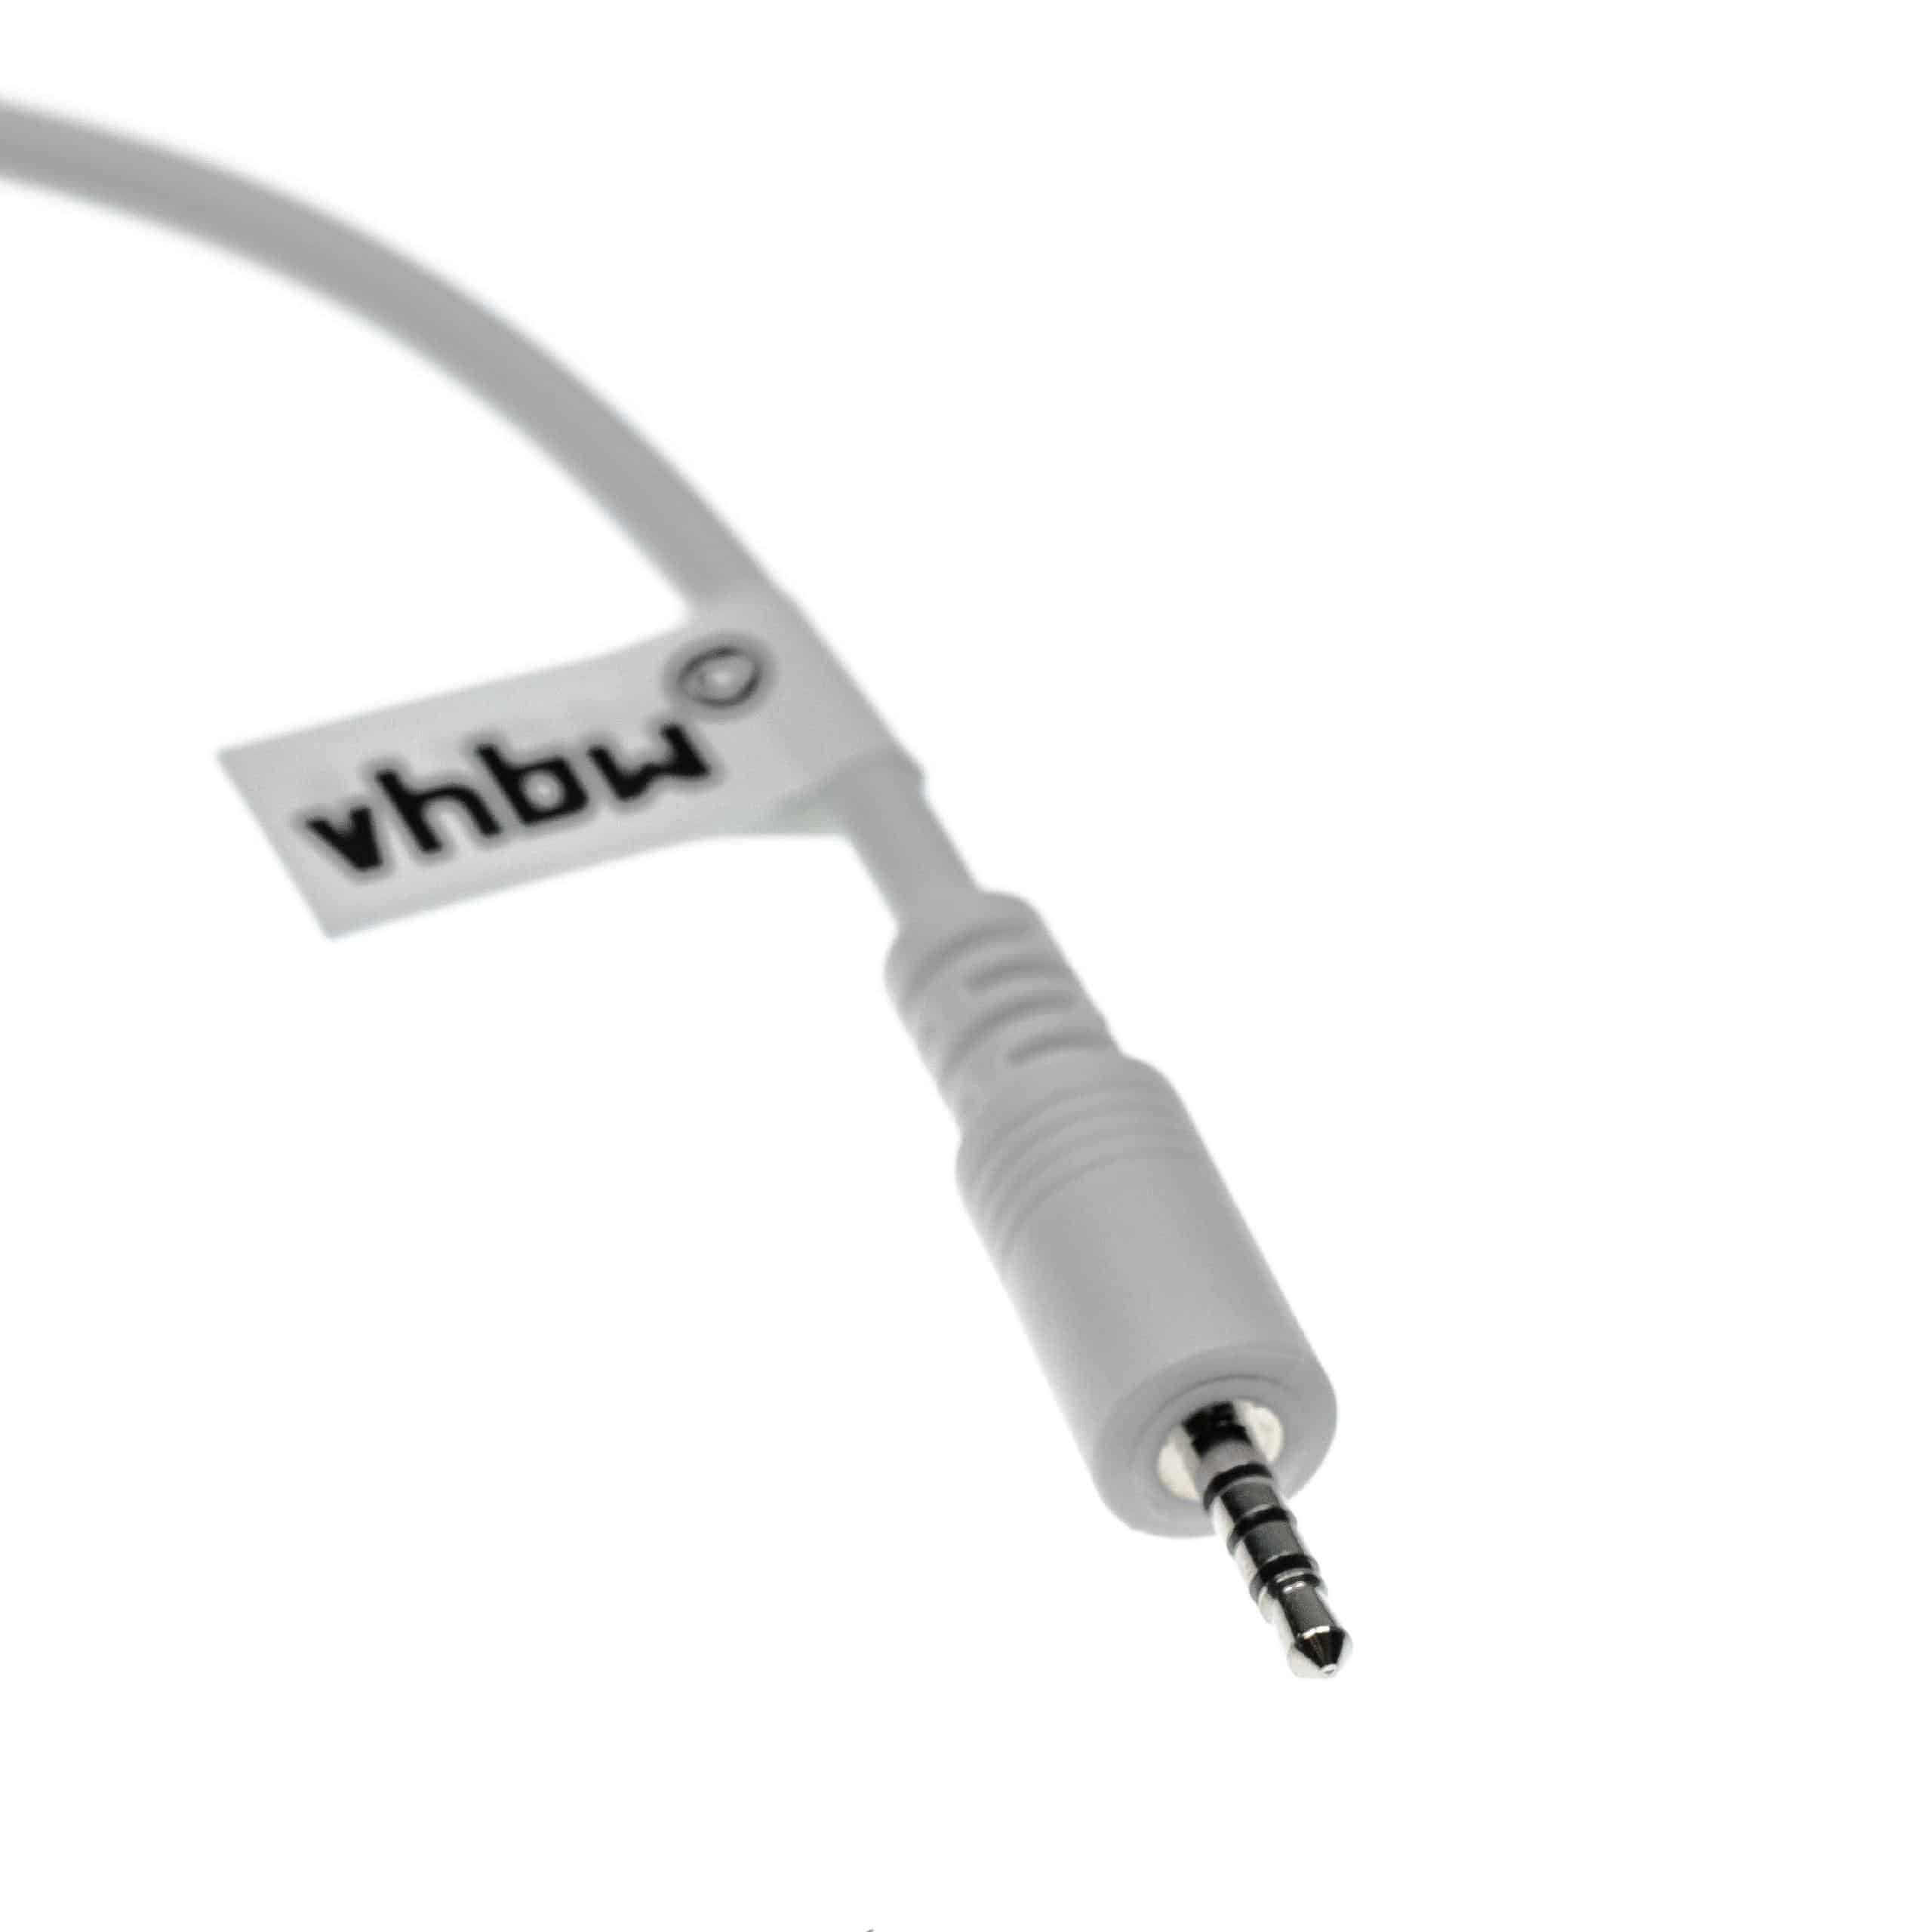 Cable de carga USB a jack 2,5 mm reemplaza auriculares AKG / JBL / Harman Kardon K495NC, etc. blanco